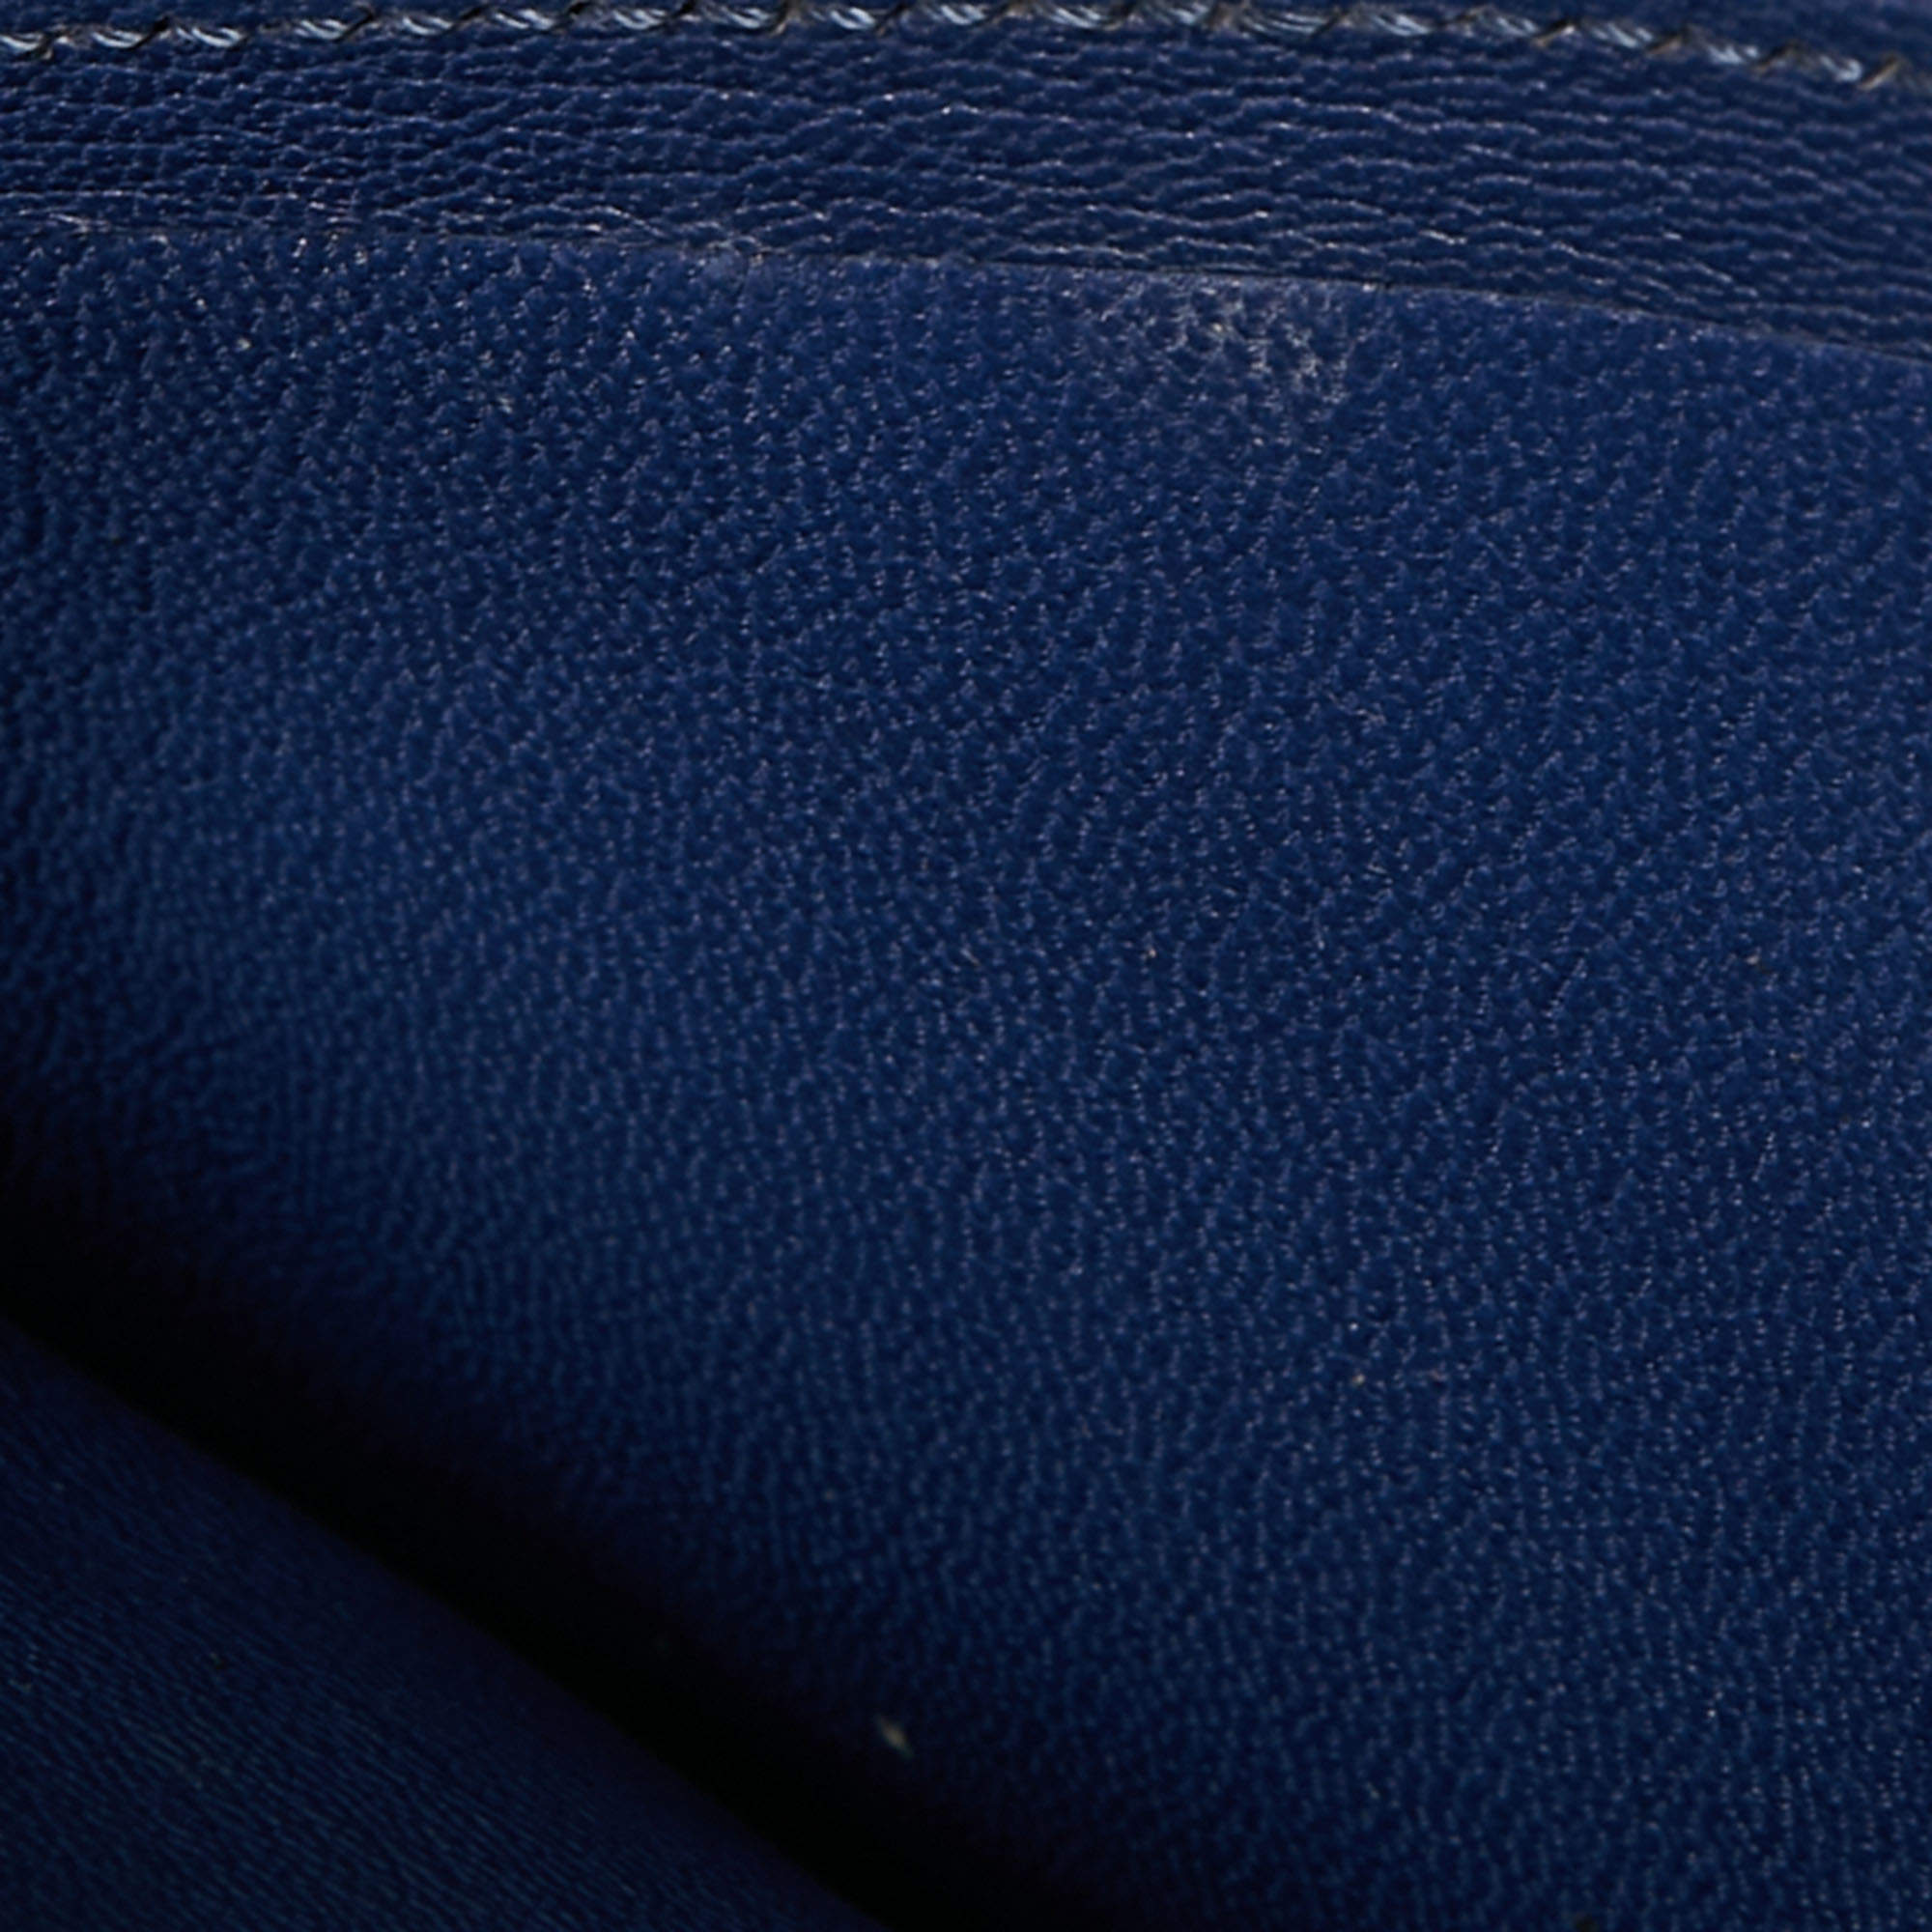 Hermes Birkin 35 Bag Blue Brighton Porosus Crocodile Palladium Hardware •  MIGHTYCHIC • 